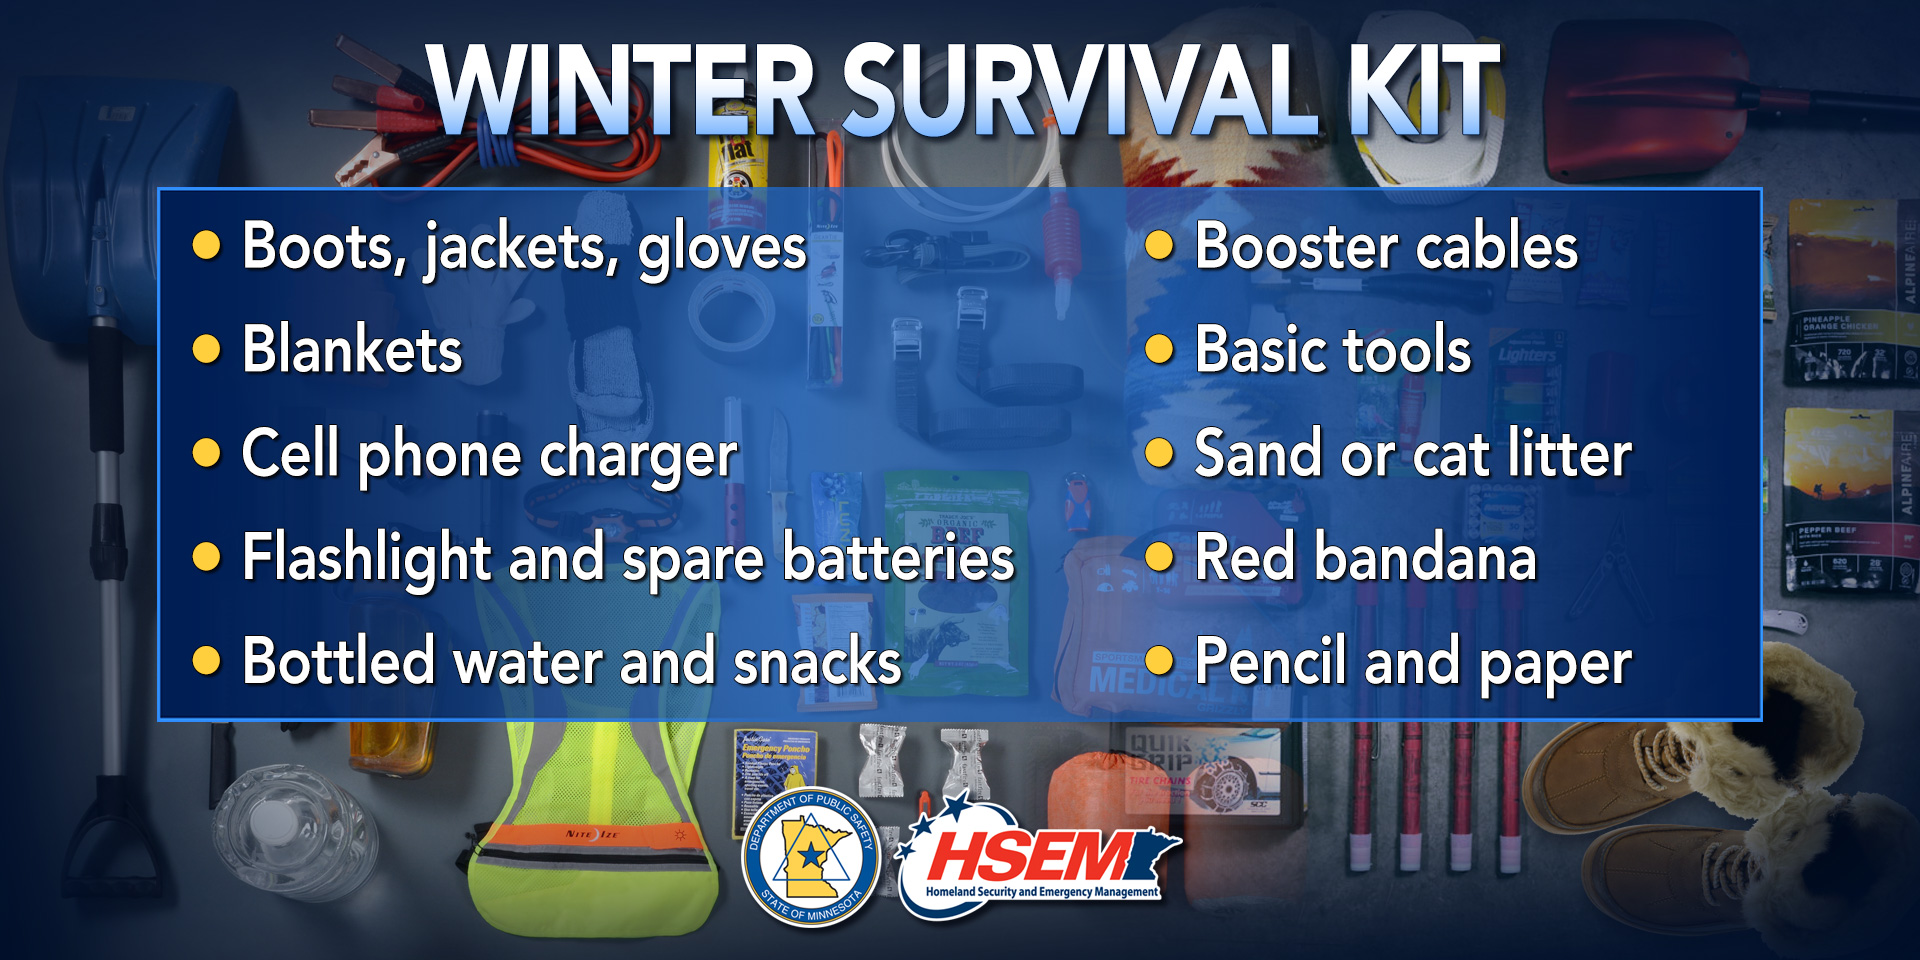 Winter Survival Kit Items